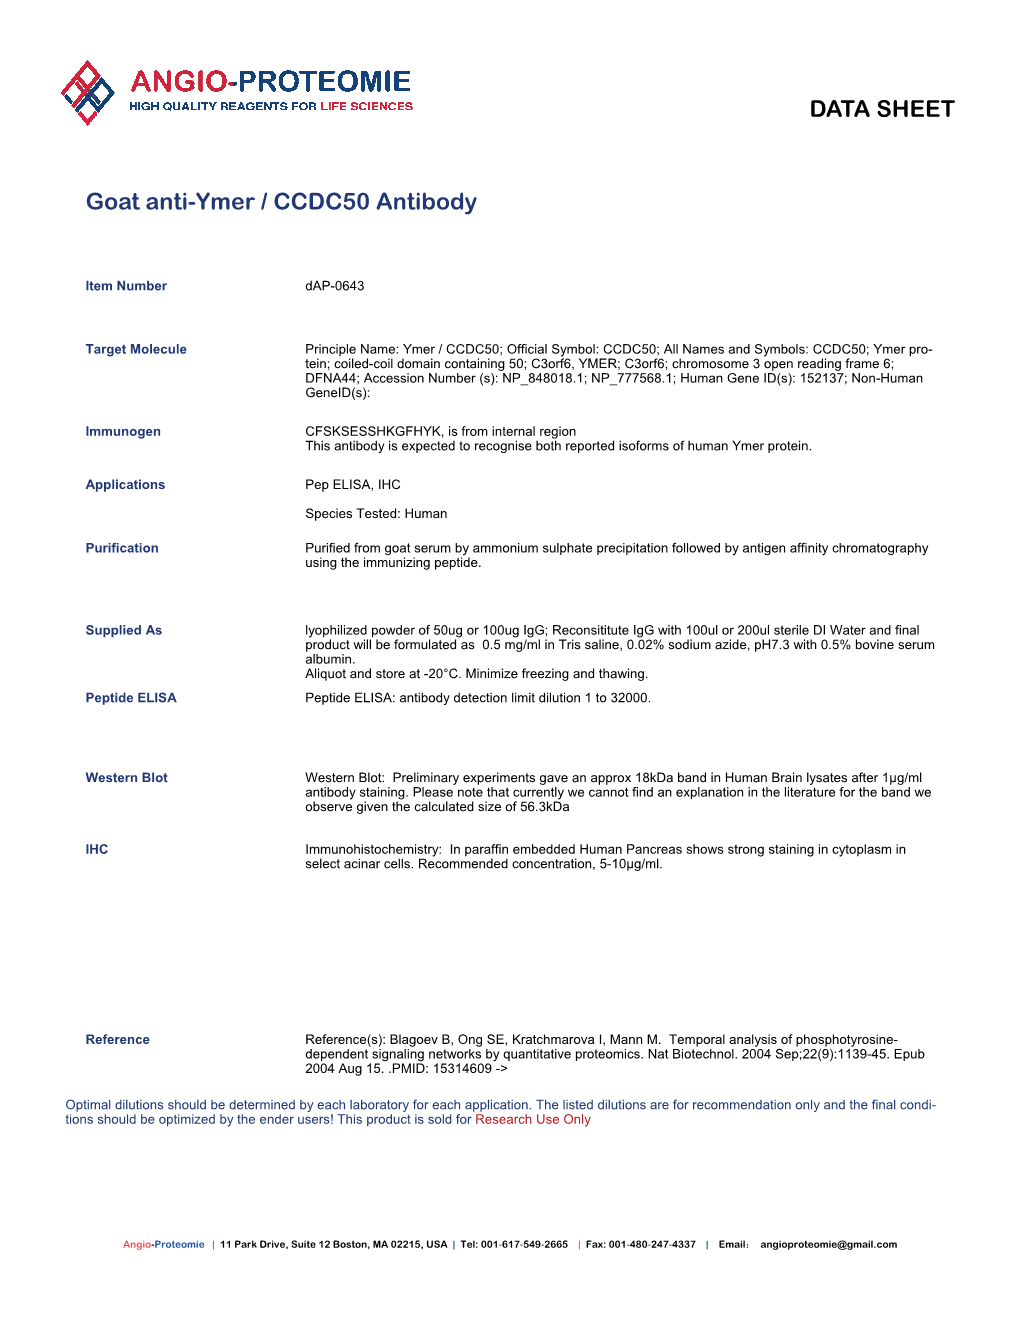 Dap-0643 Goat Anti-Ymer Or CCDC50 Antibody-PDF.Pdf